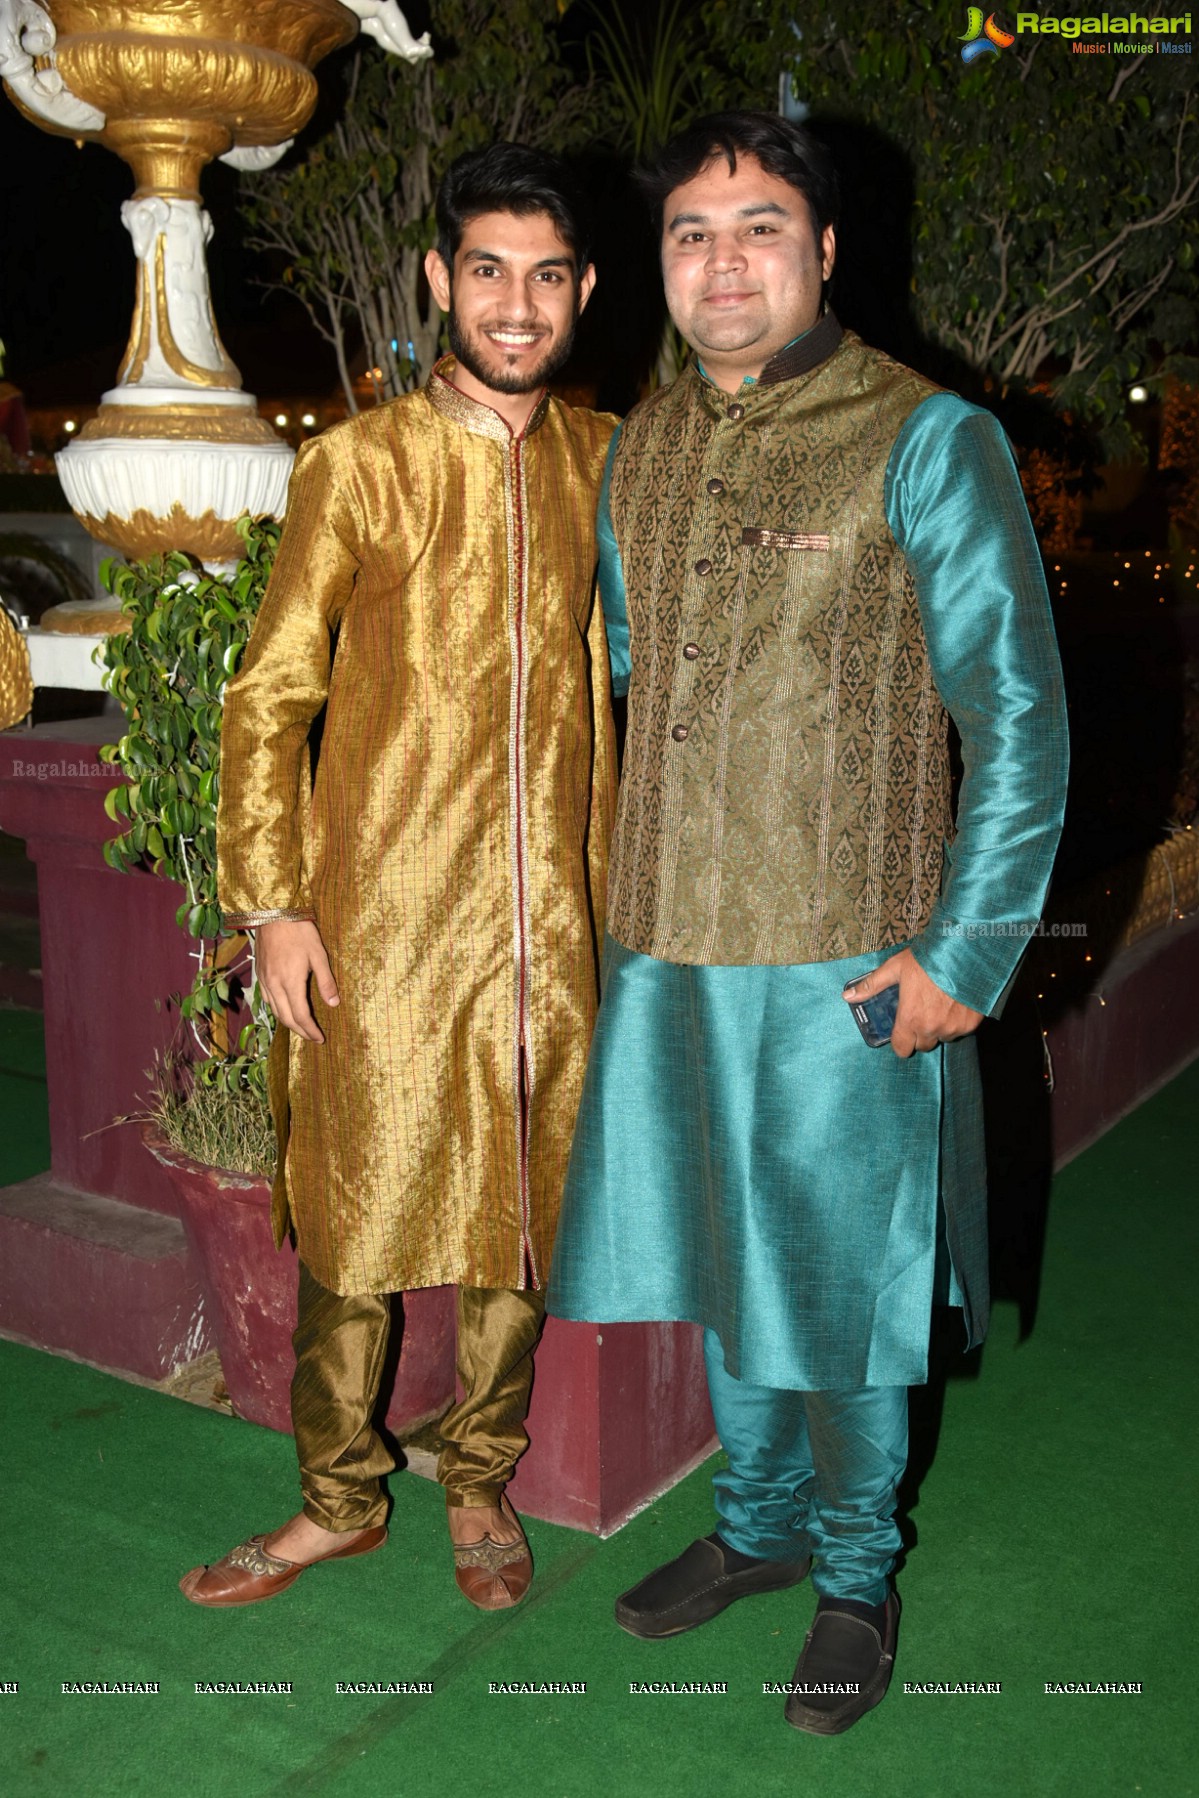 Sanchak and Mehendi of Aamer Javeed - Ruba Khan at Paigah Palace, Hyderabad